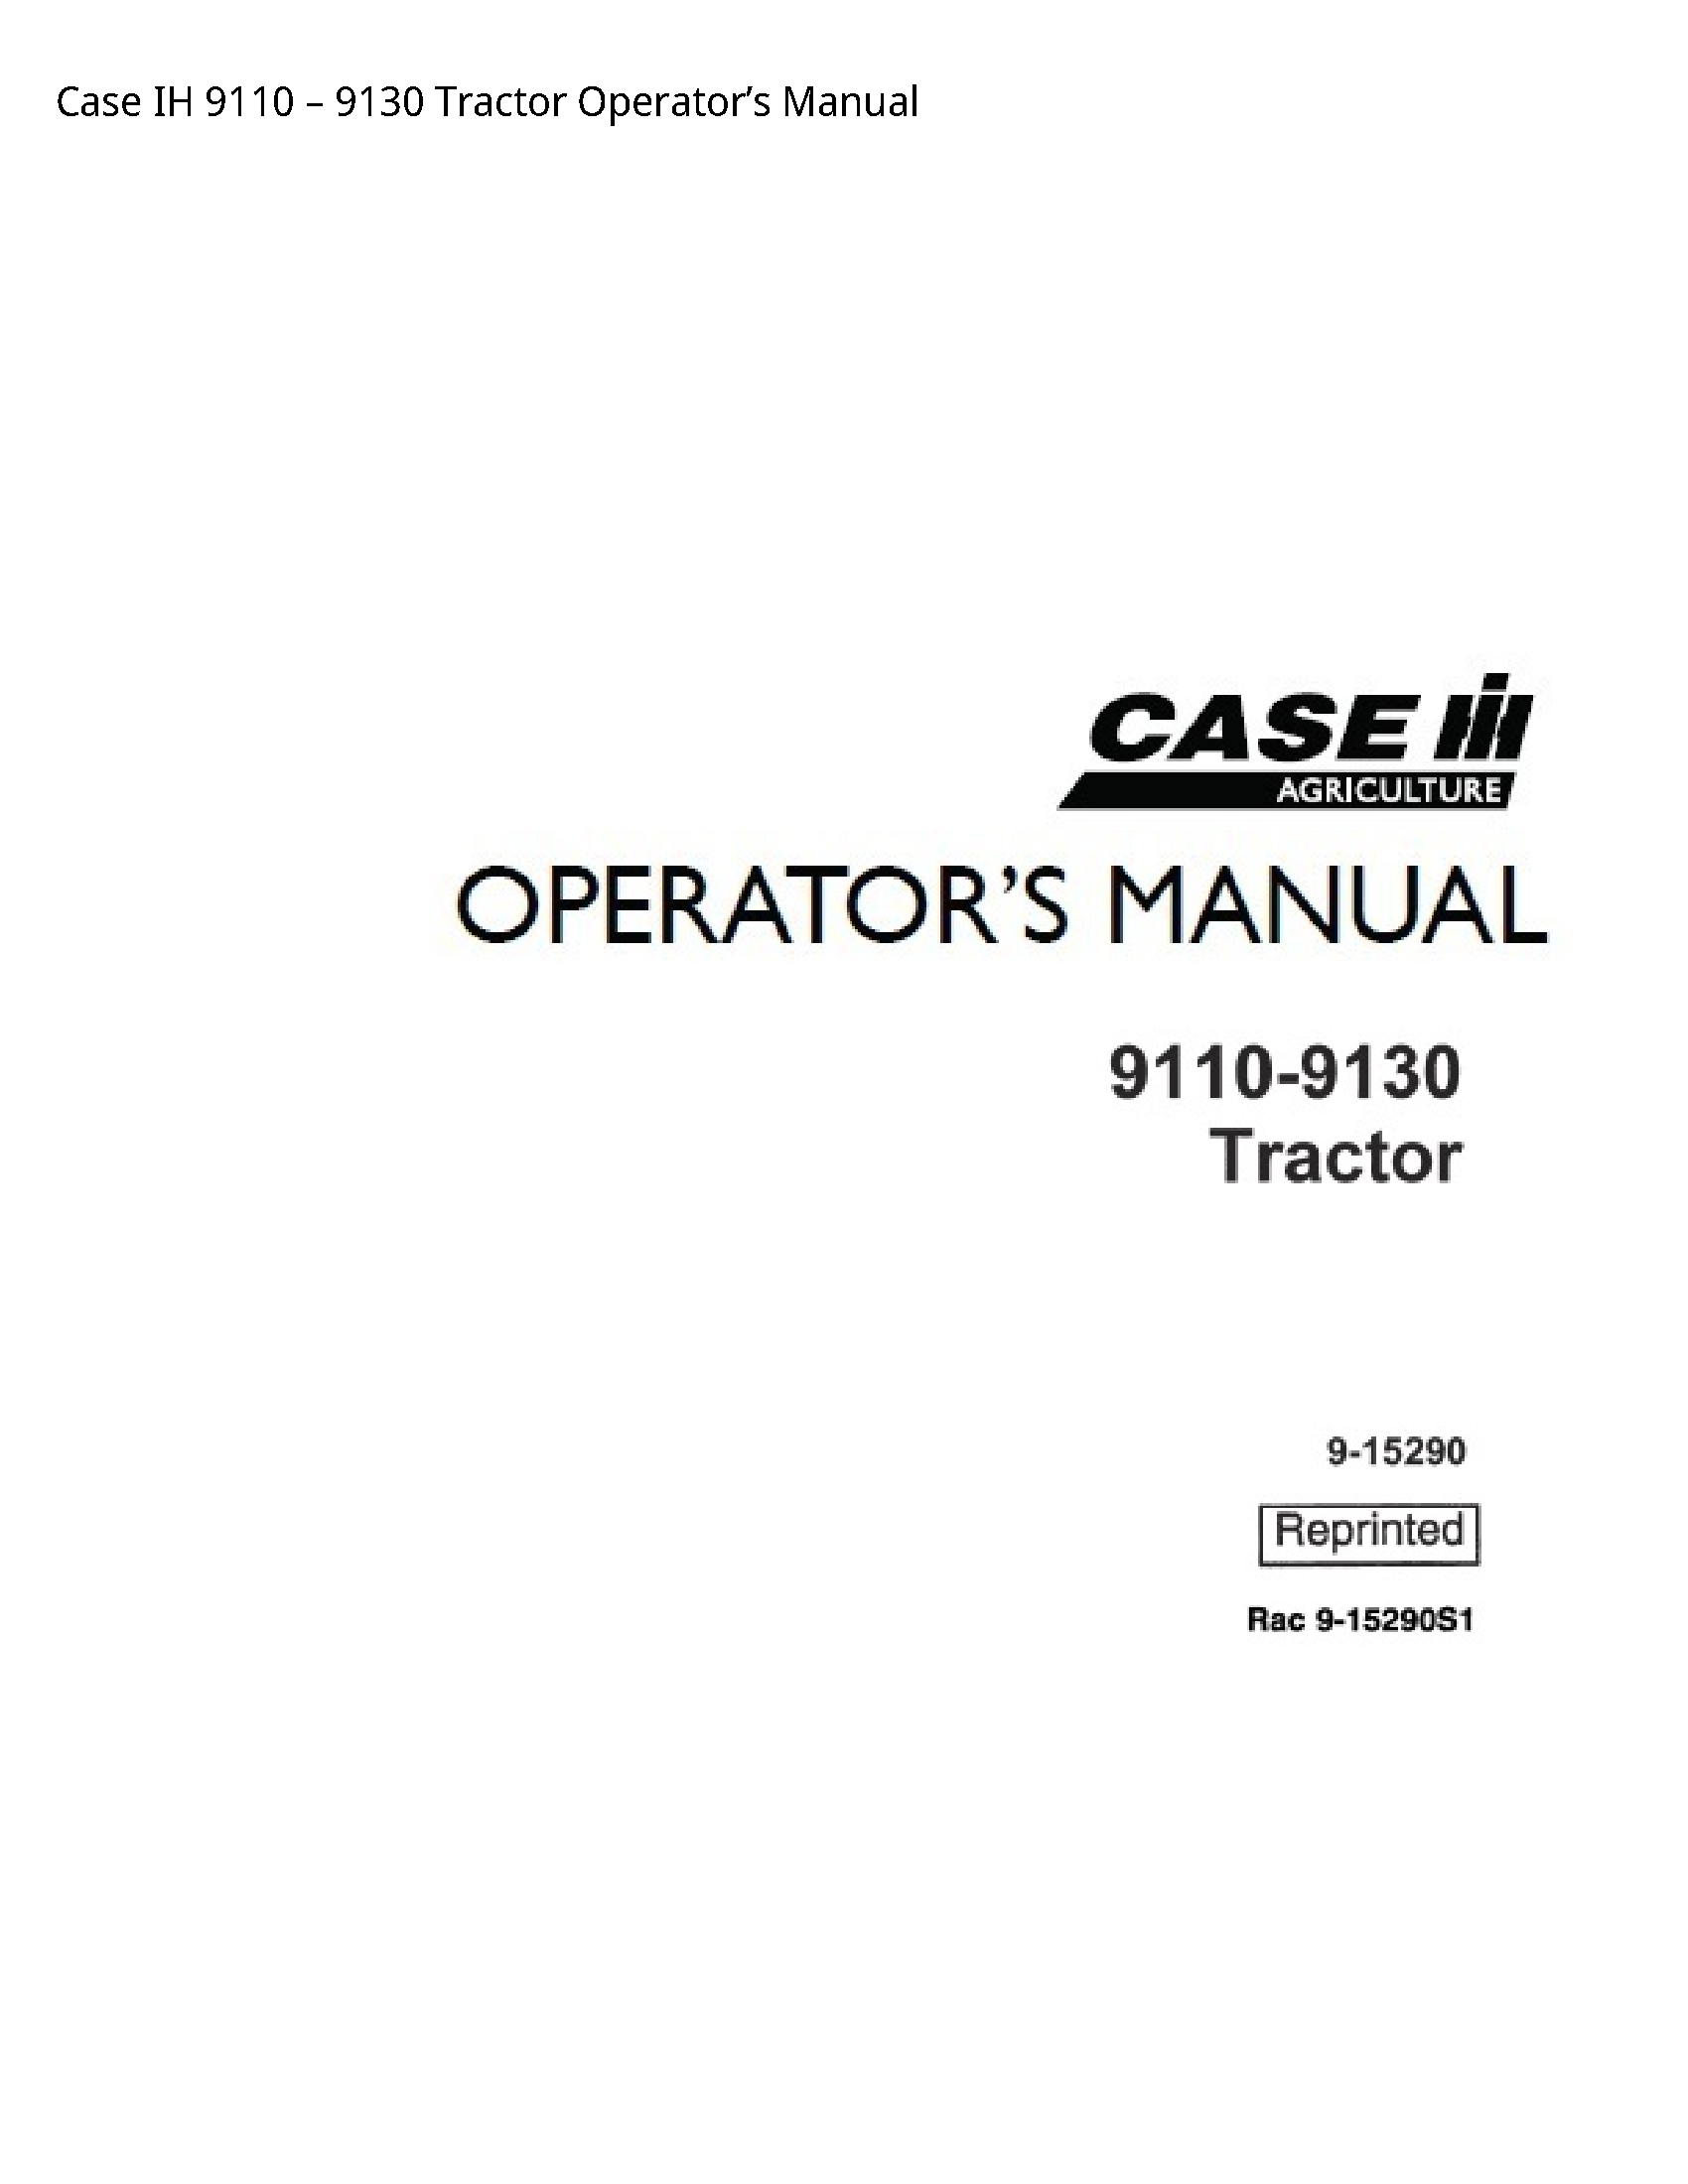 Case/Case IH 9110 IH Tractor Operator’s manual